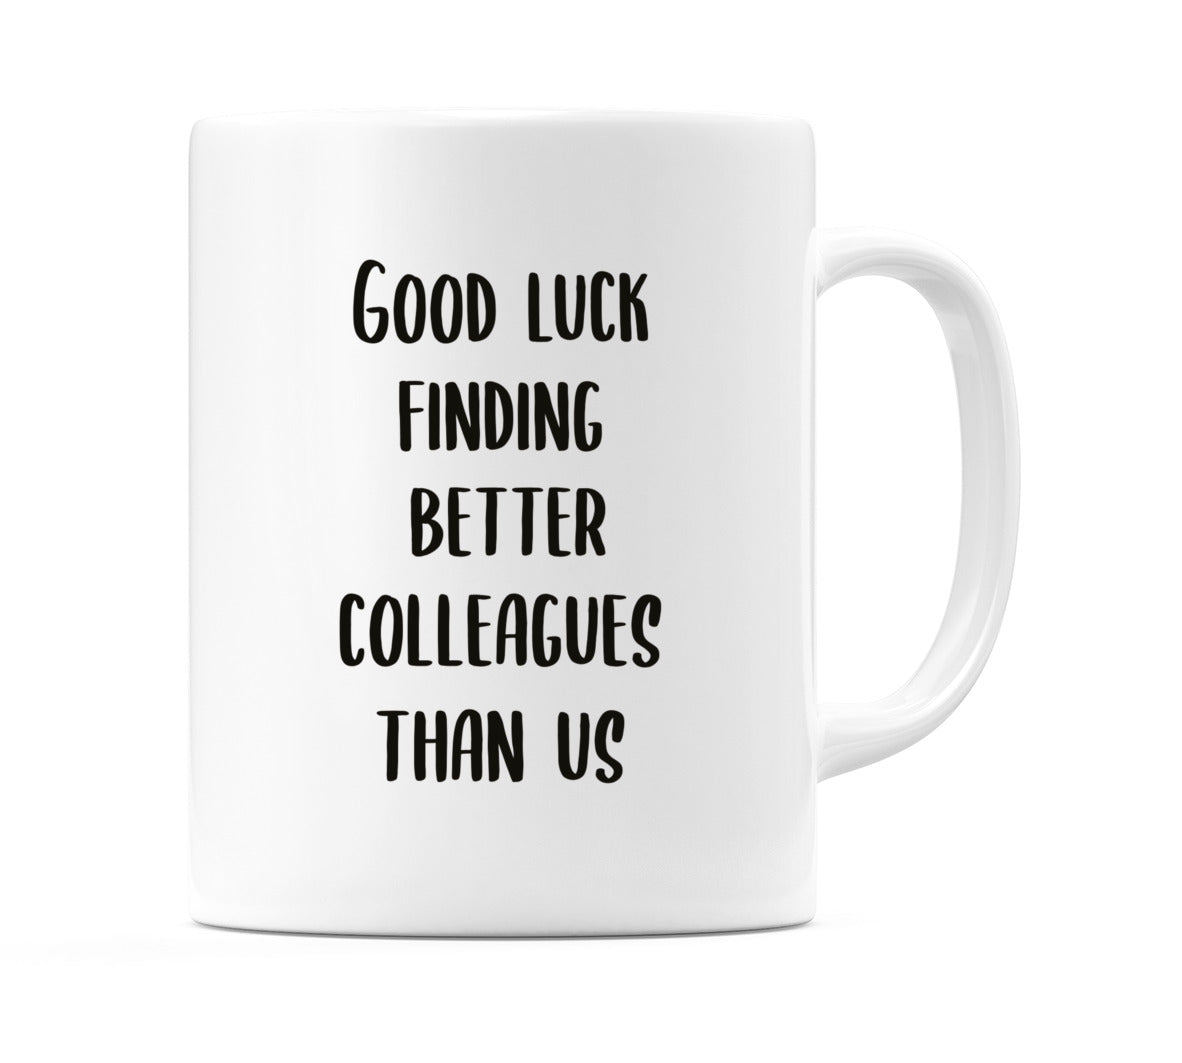 Good Luck Finding Better Colleagues than us Mug